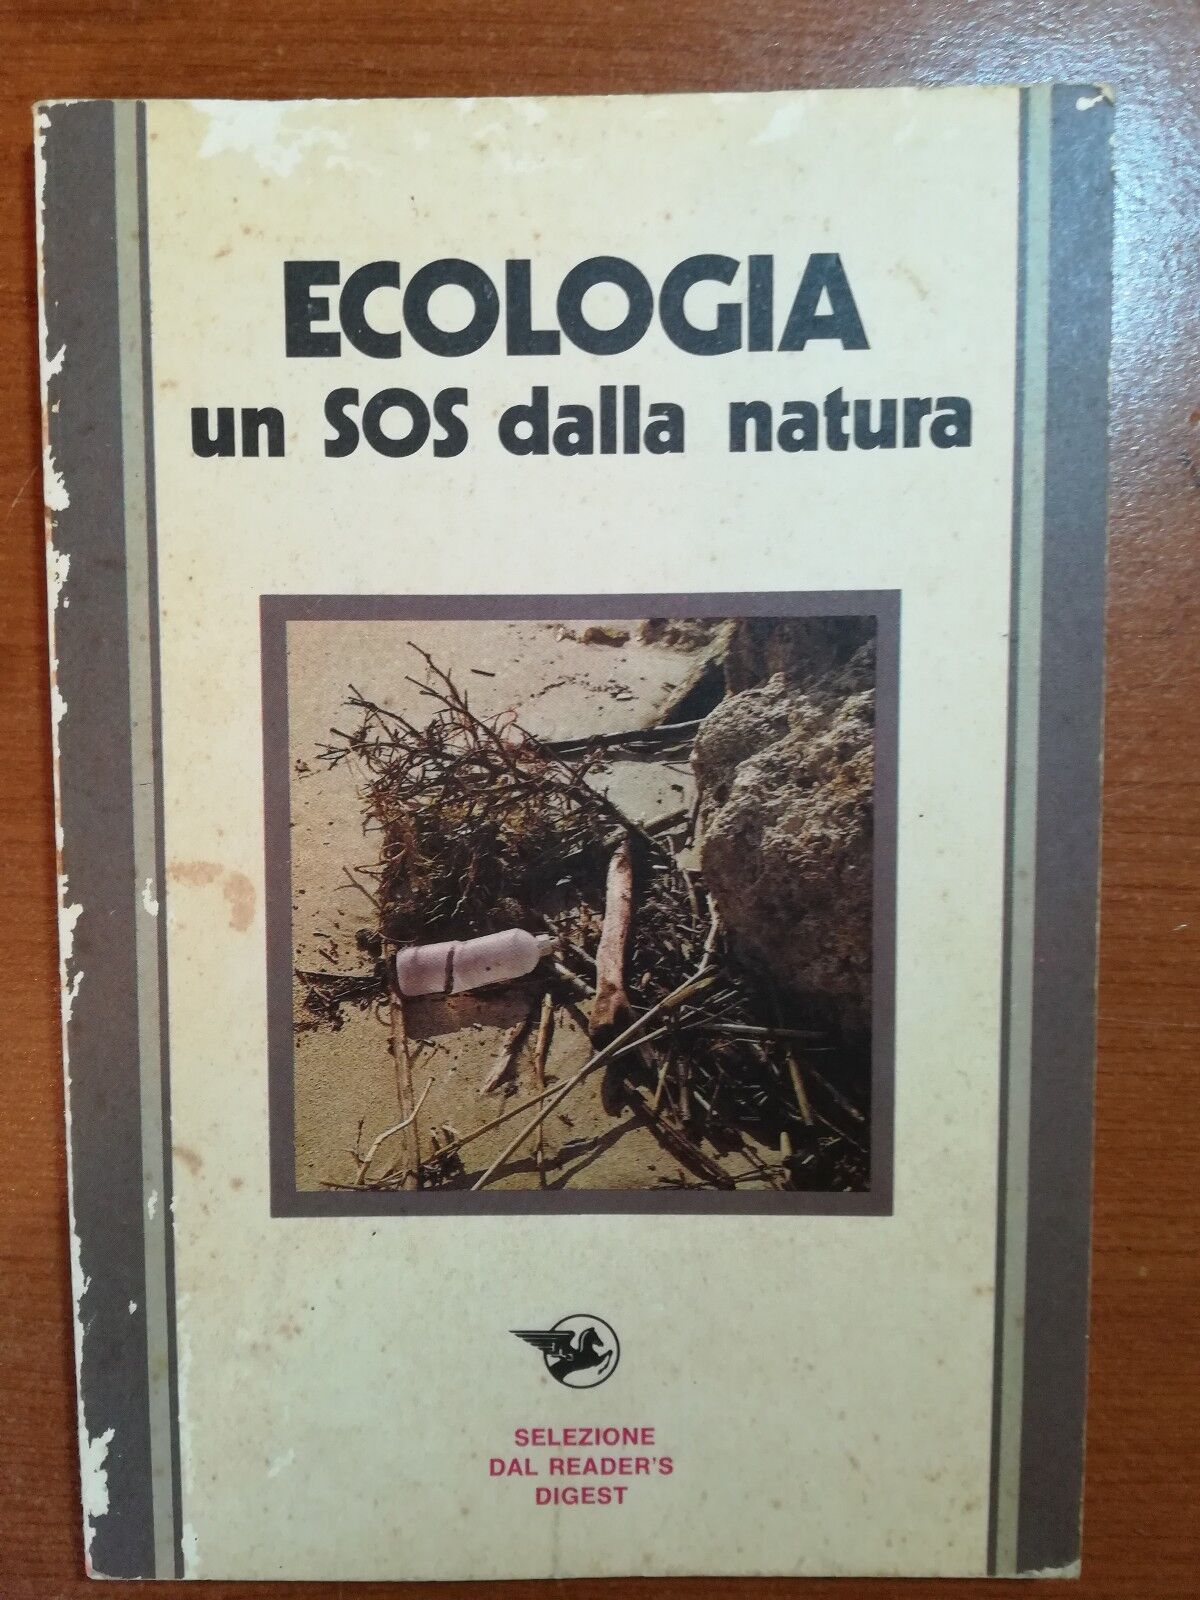 Ecologia un sos dalla natura - Palmieri Mario - Reader's Digest - 1973-M